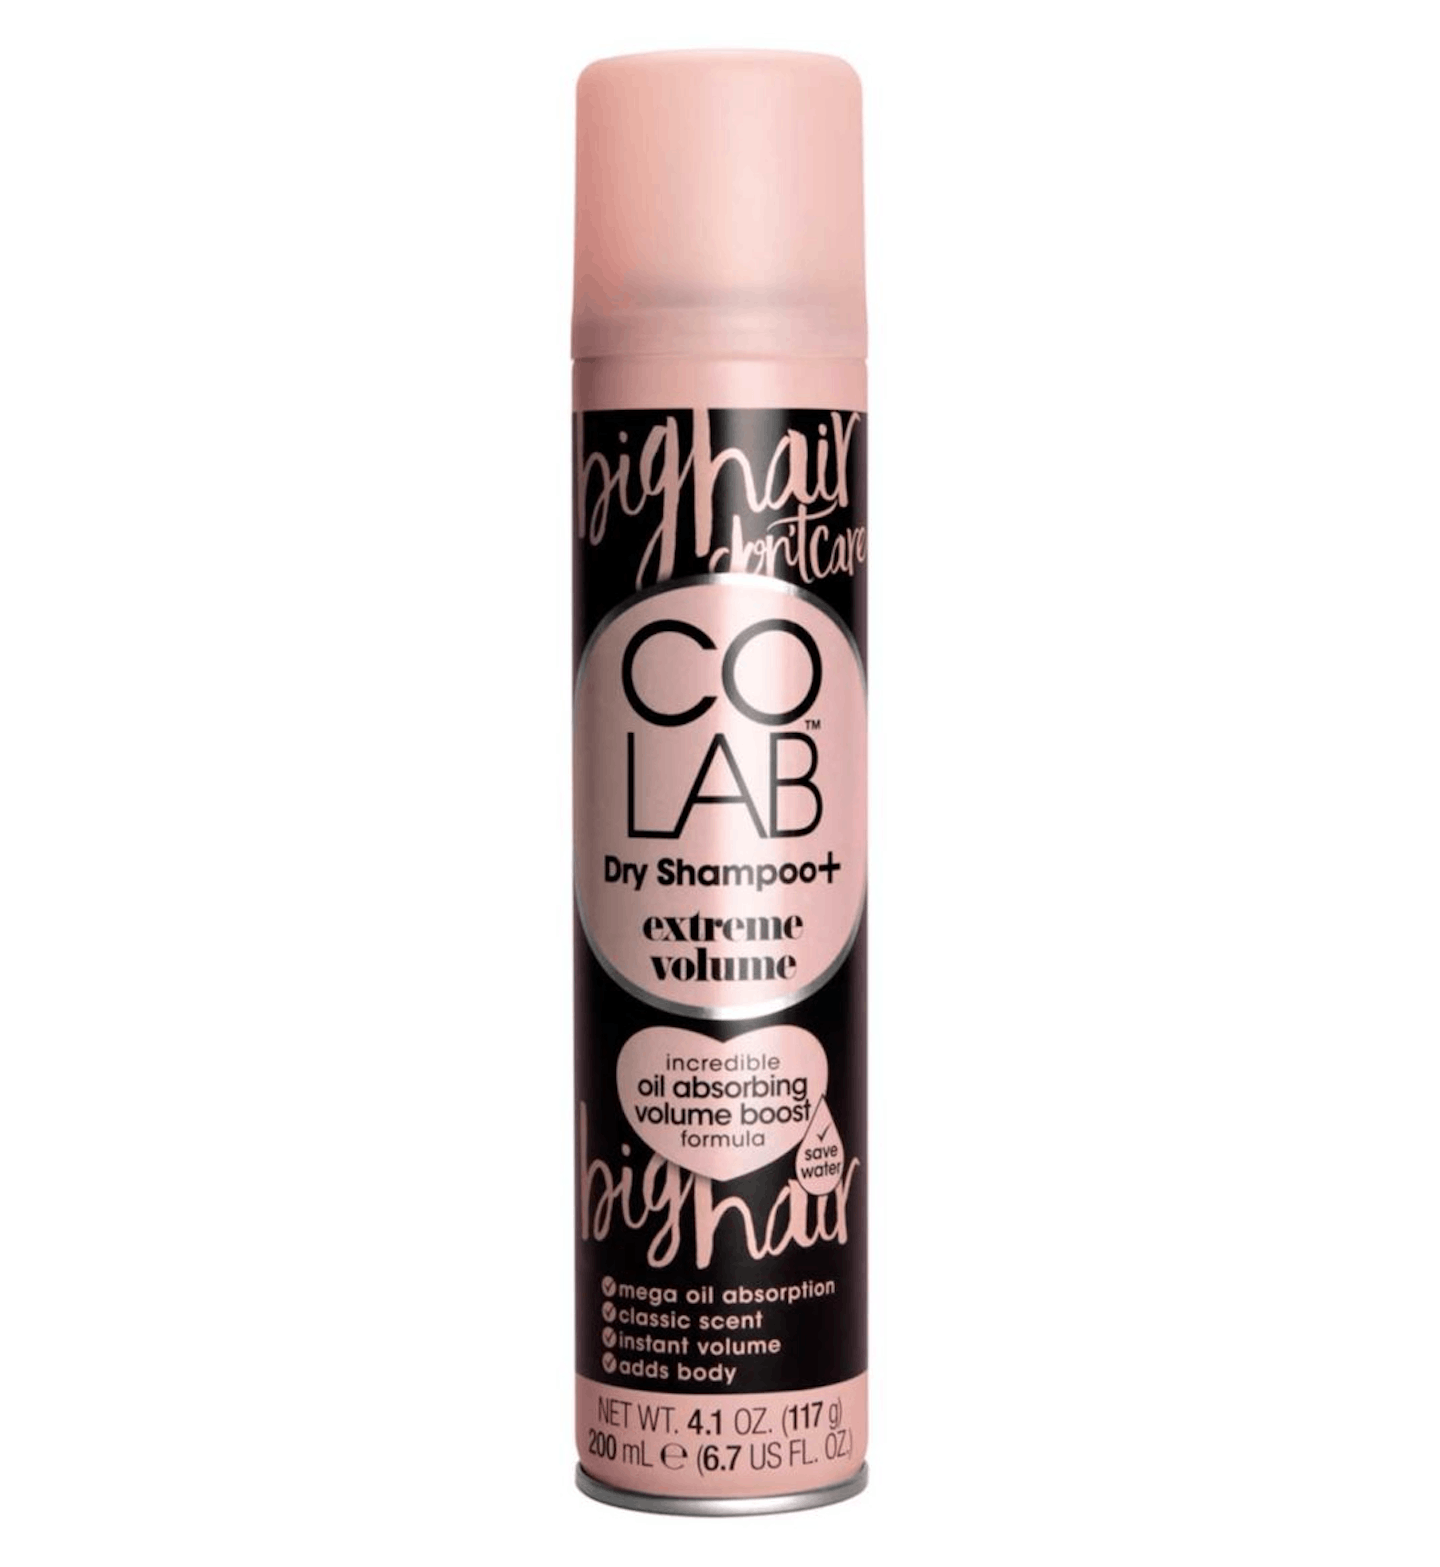 Colab+ Dry Shampoo Extra Volume, £4.49